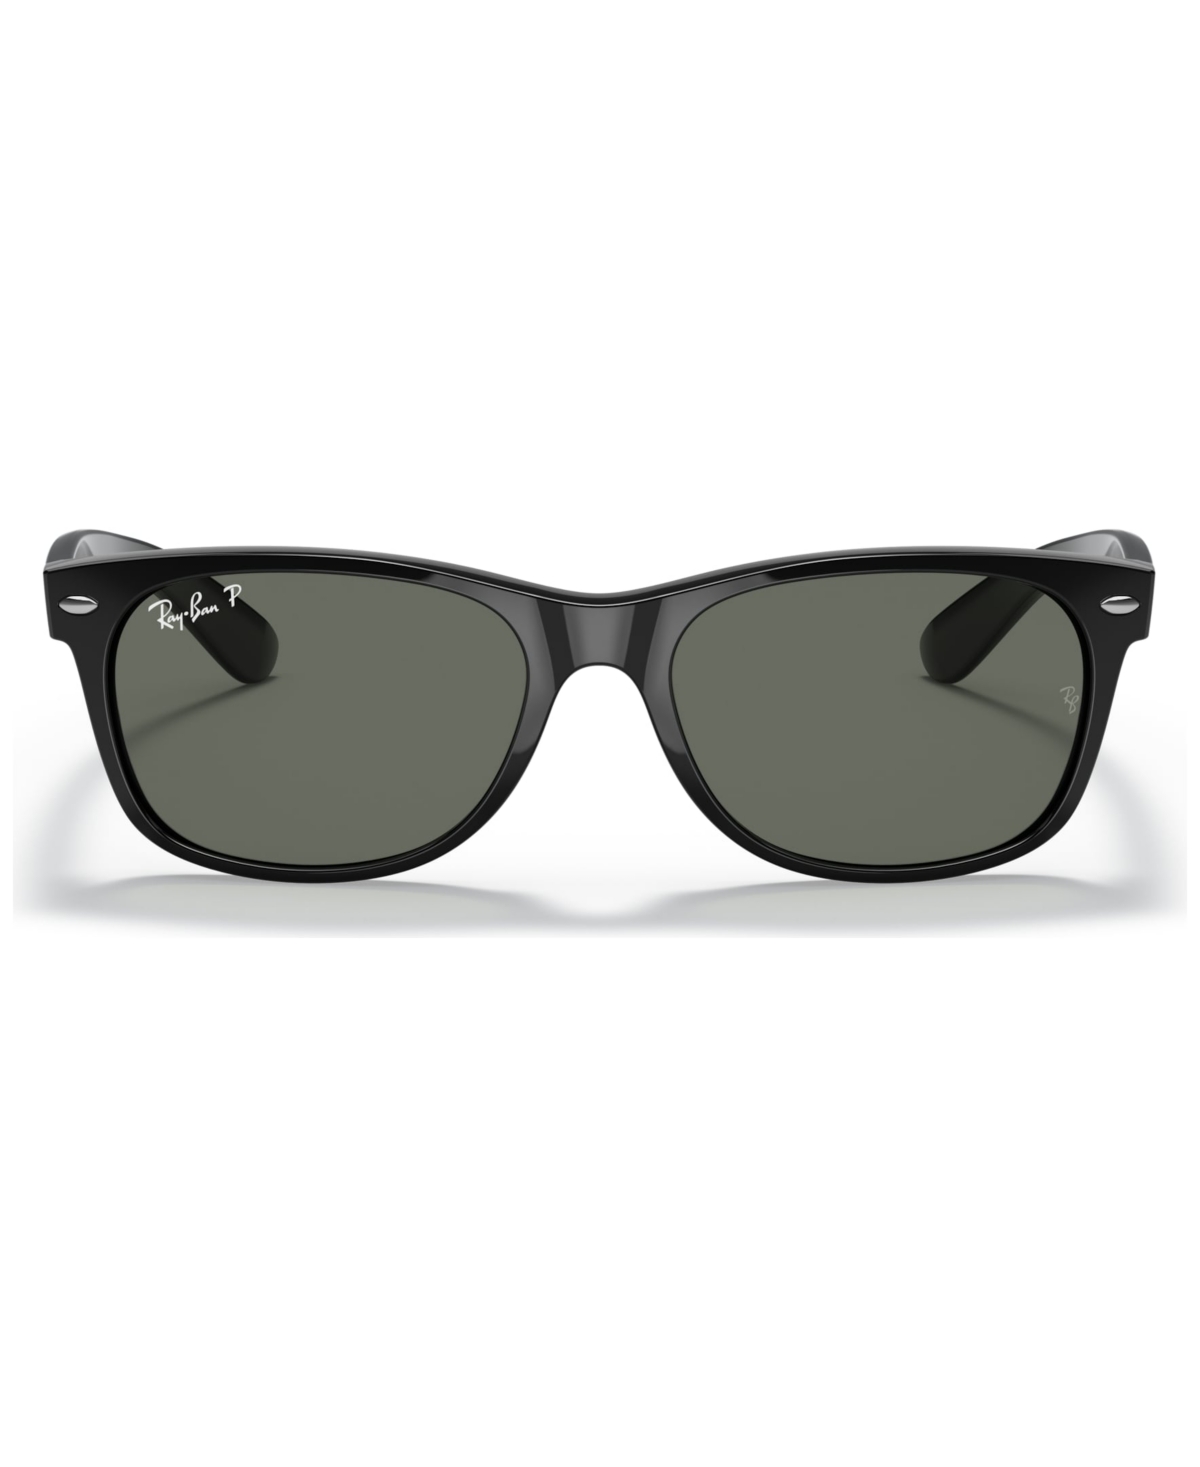 Ray-Ban Polarized Sunglasses, RB2132 NEW WAYFARER 